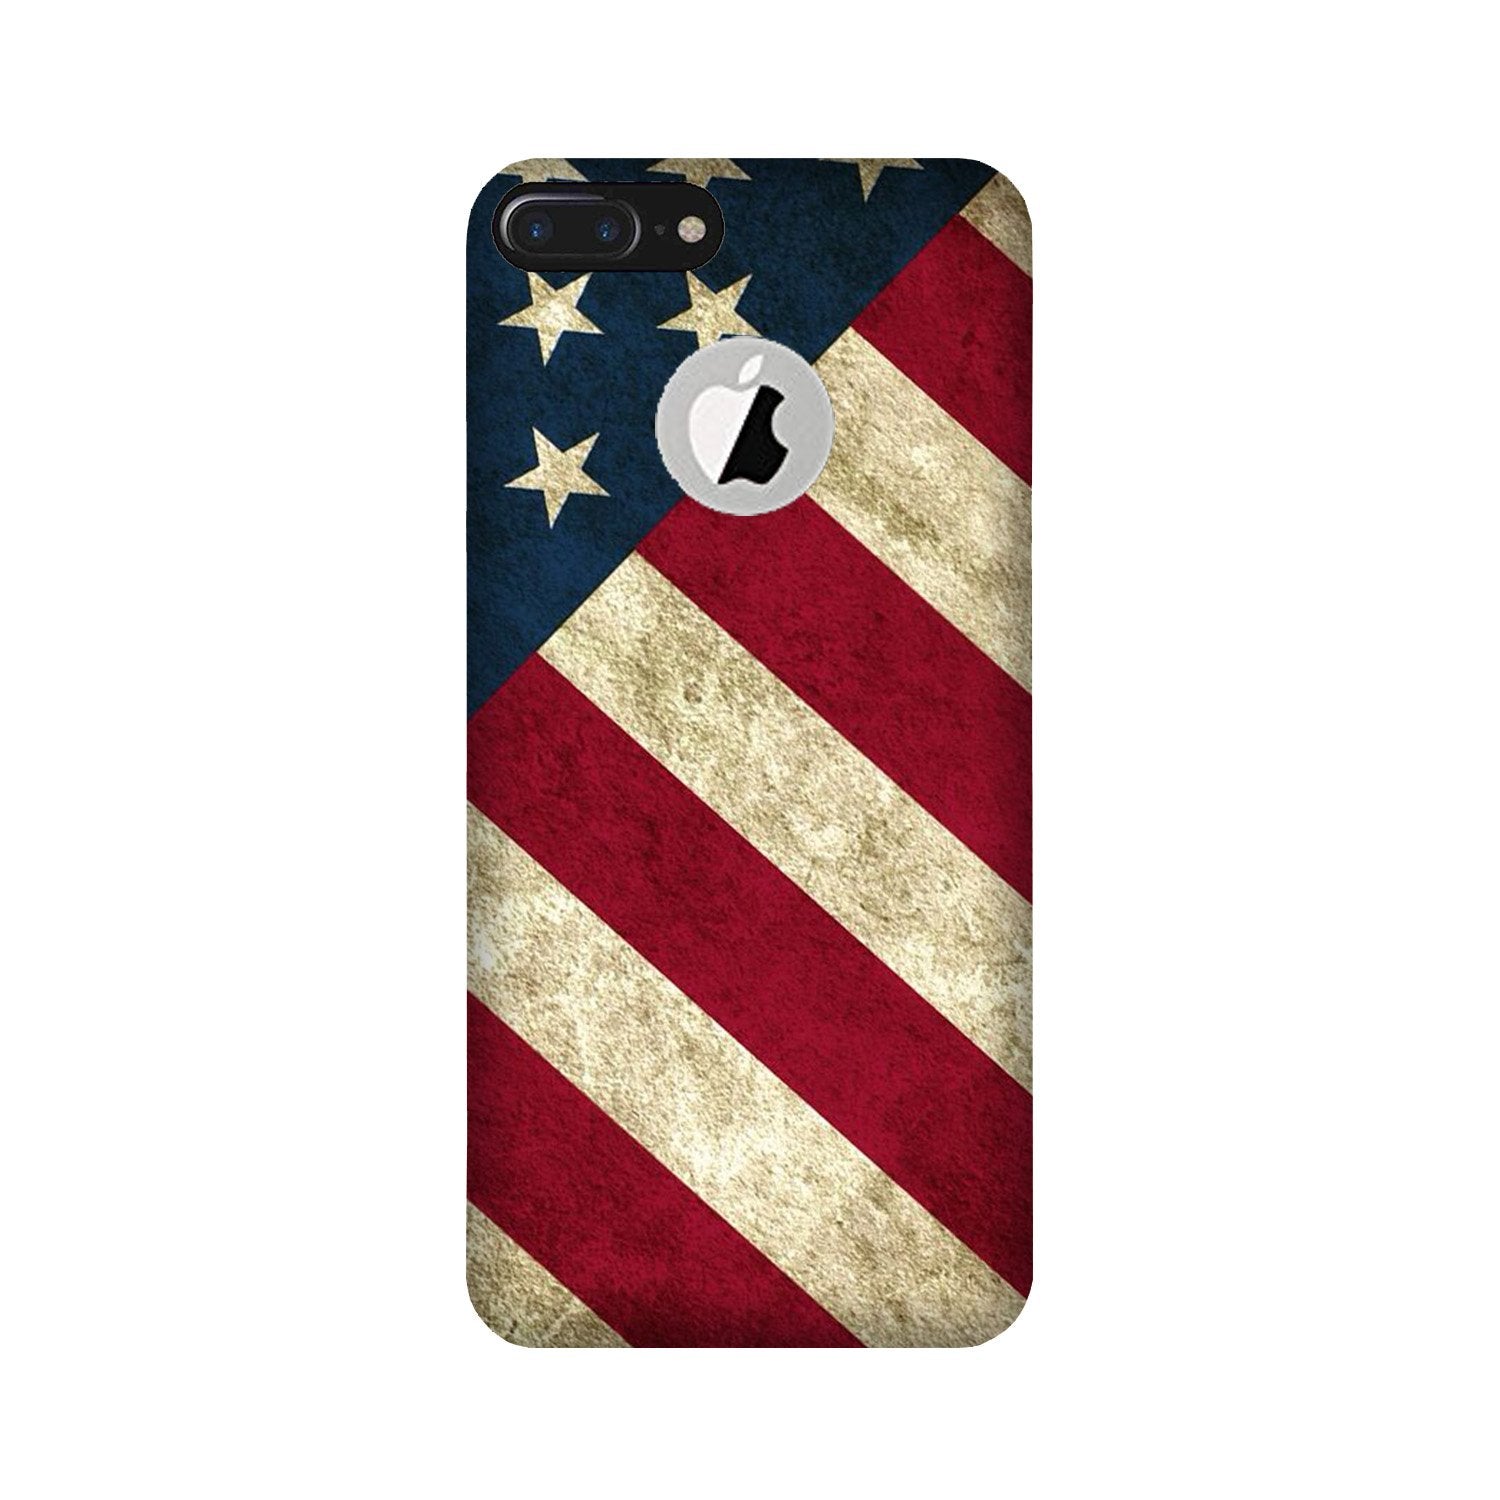 America Case for iPhone 7 Plus logo cut